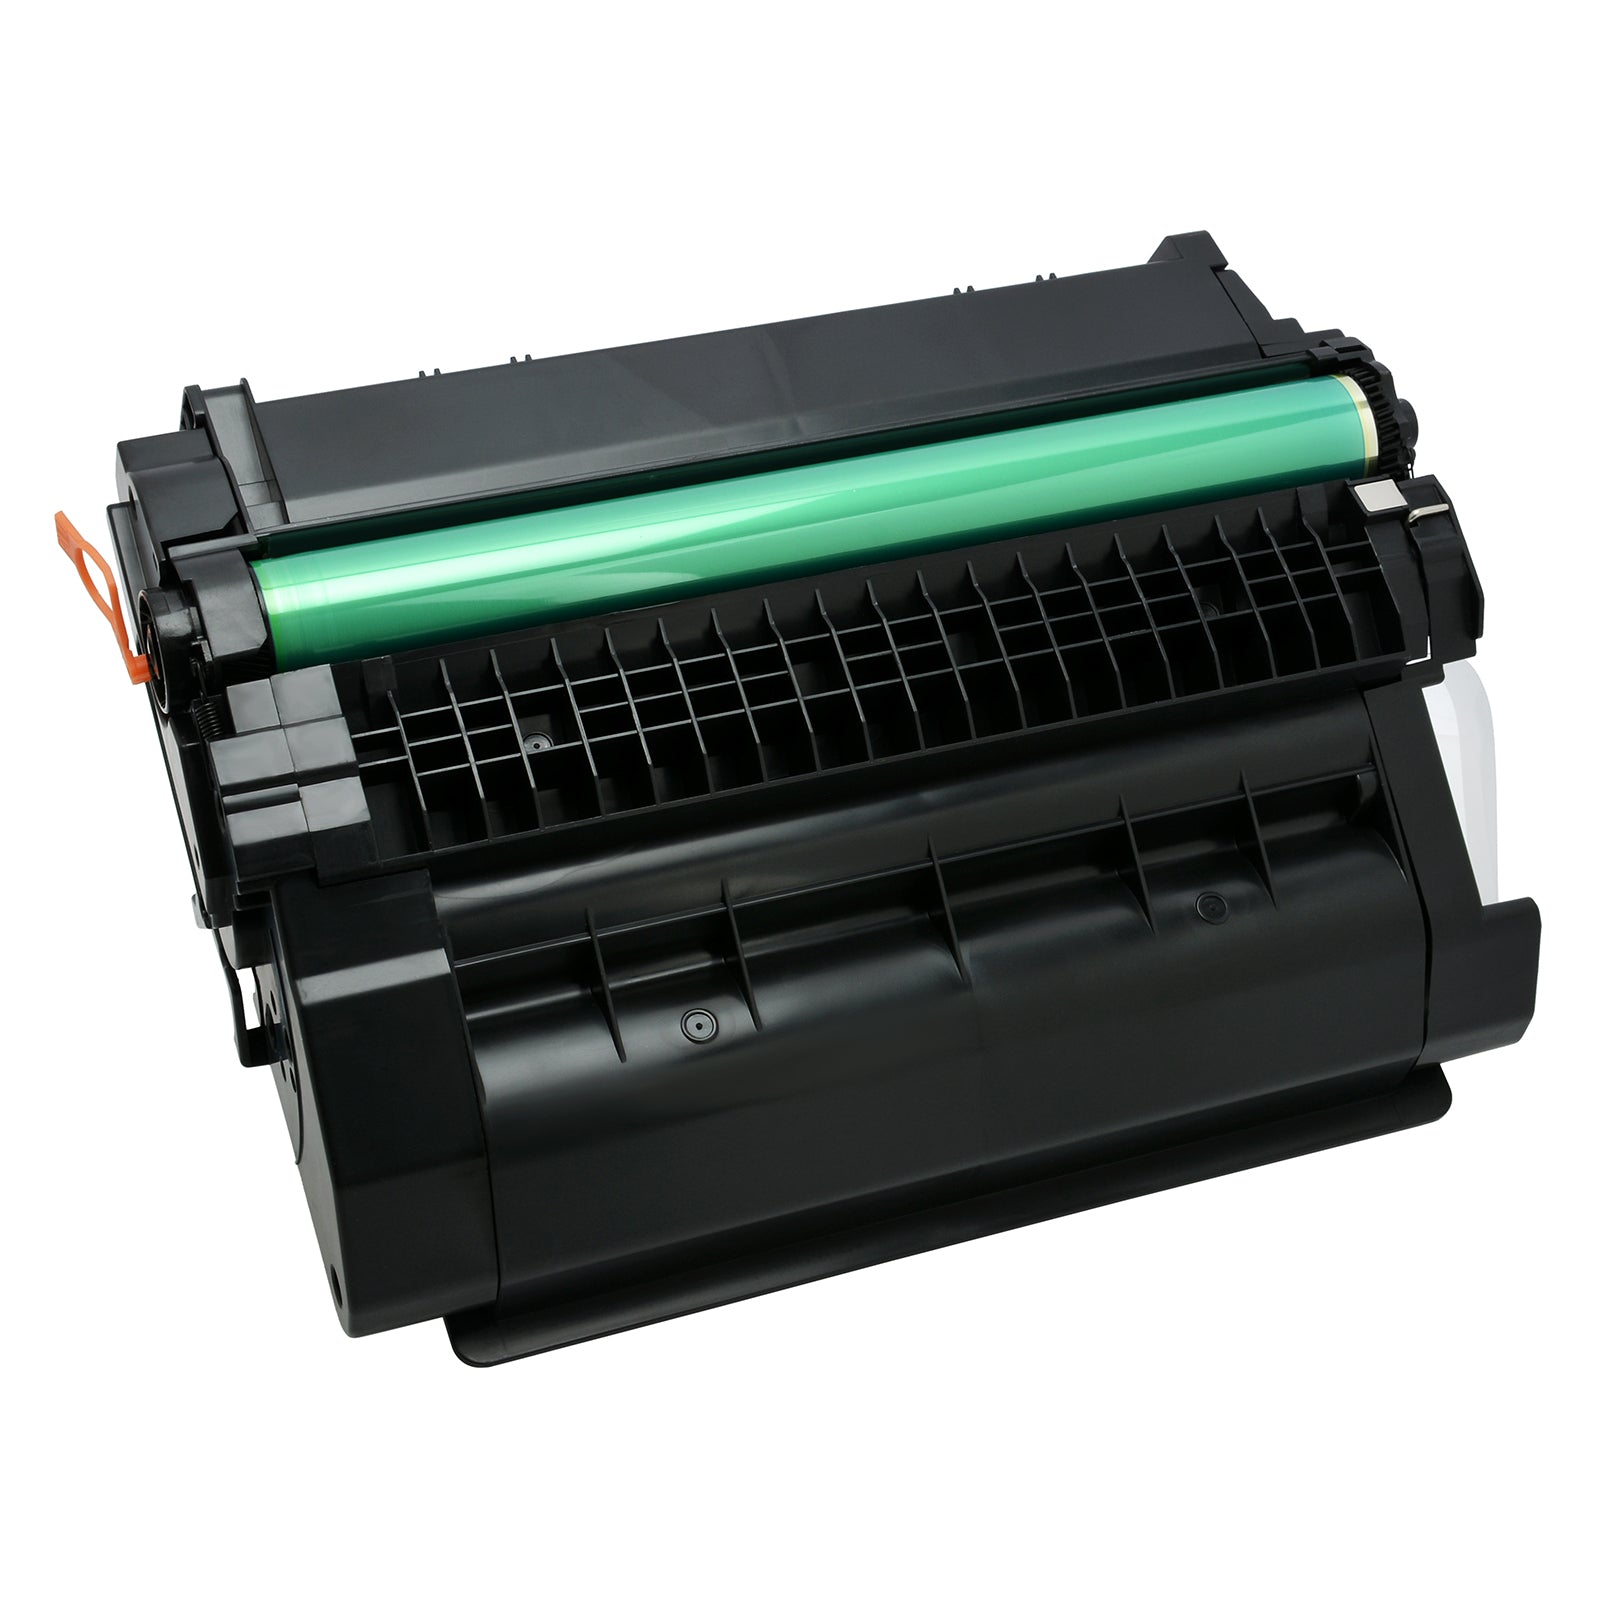 SKY  64A CC364A  Toner Cartridge  for HP LaserJet P4014 P4014N P4015N P4015X P4515N P4015DN P4515X P4015 Printer